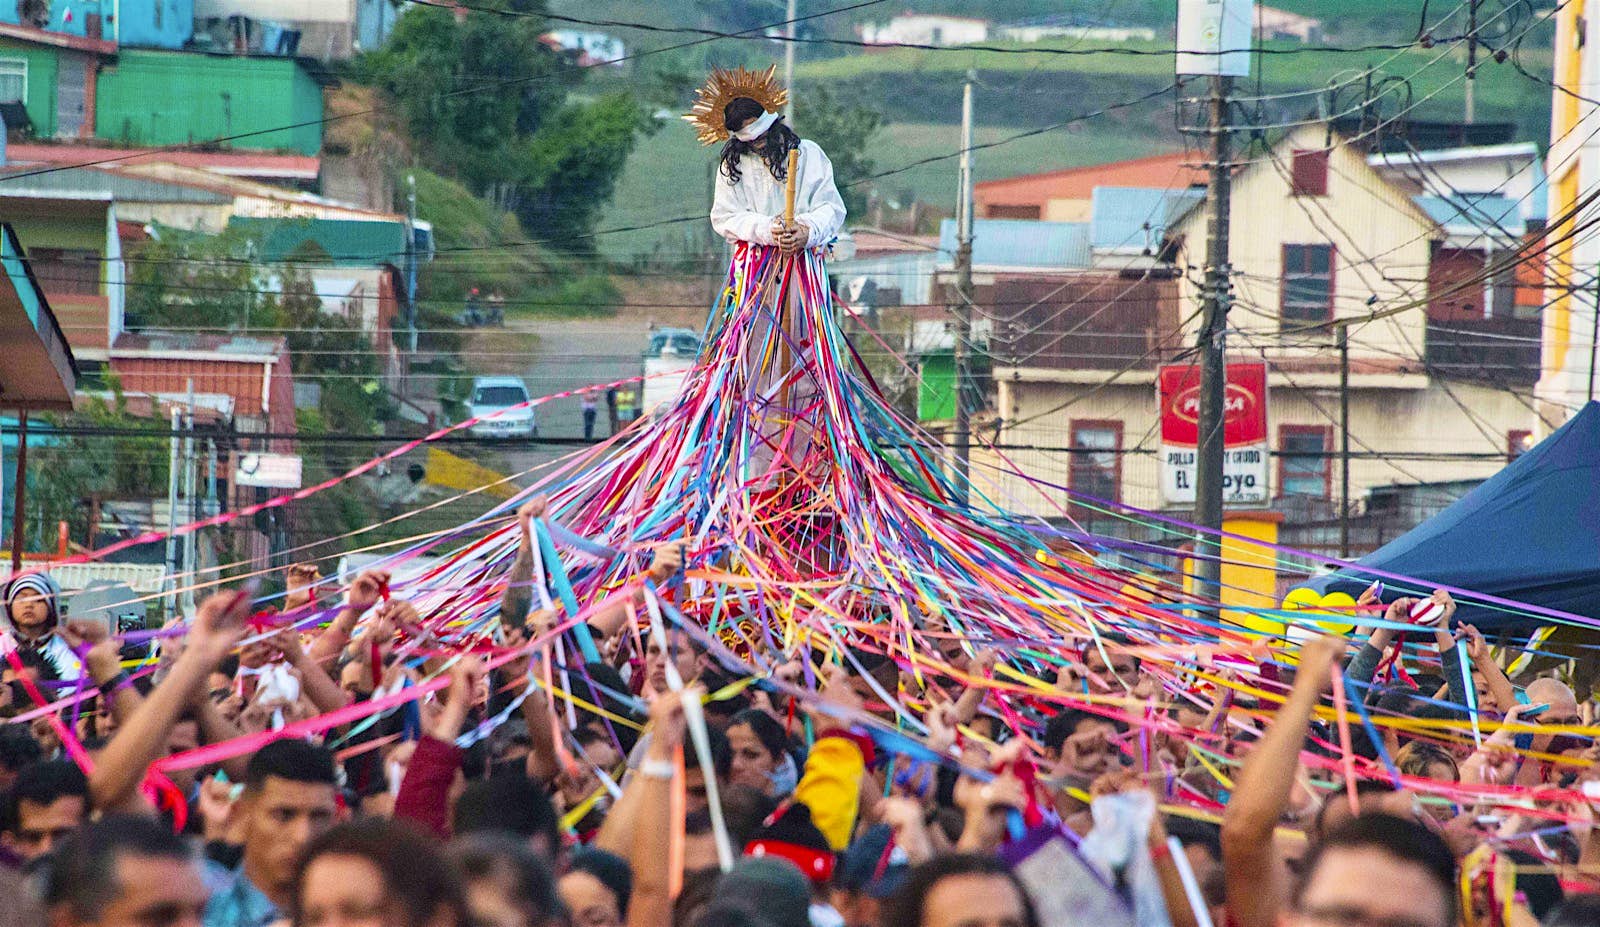 Semana Santa celebrations across Latin America and the Caribbean